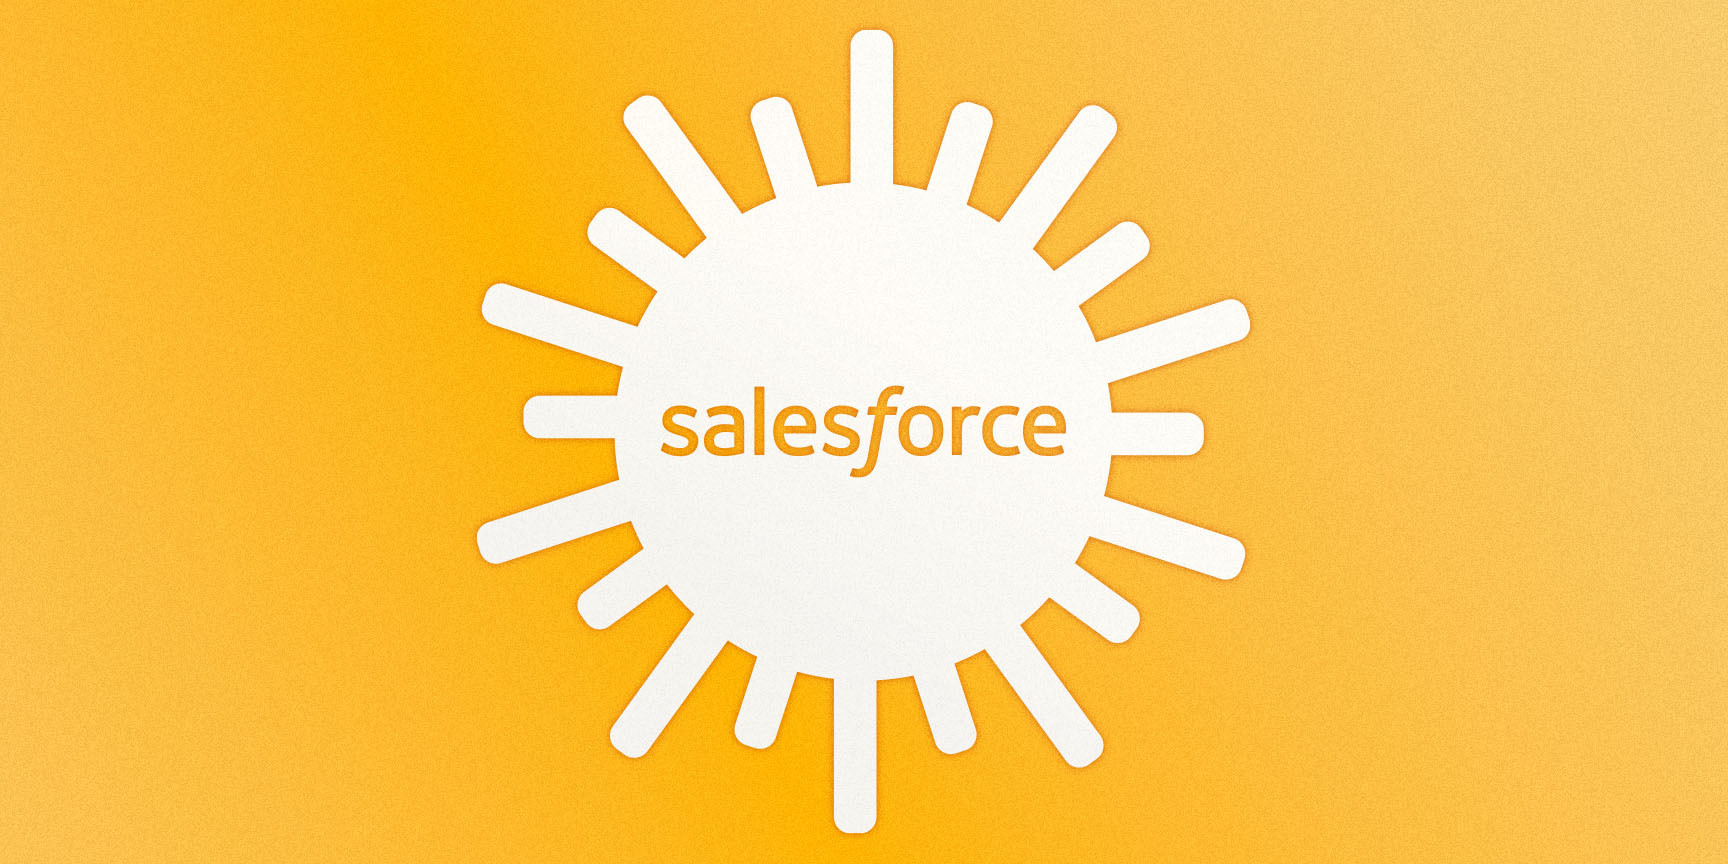 Salesforce Sails Forth